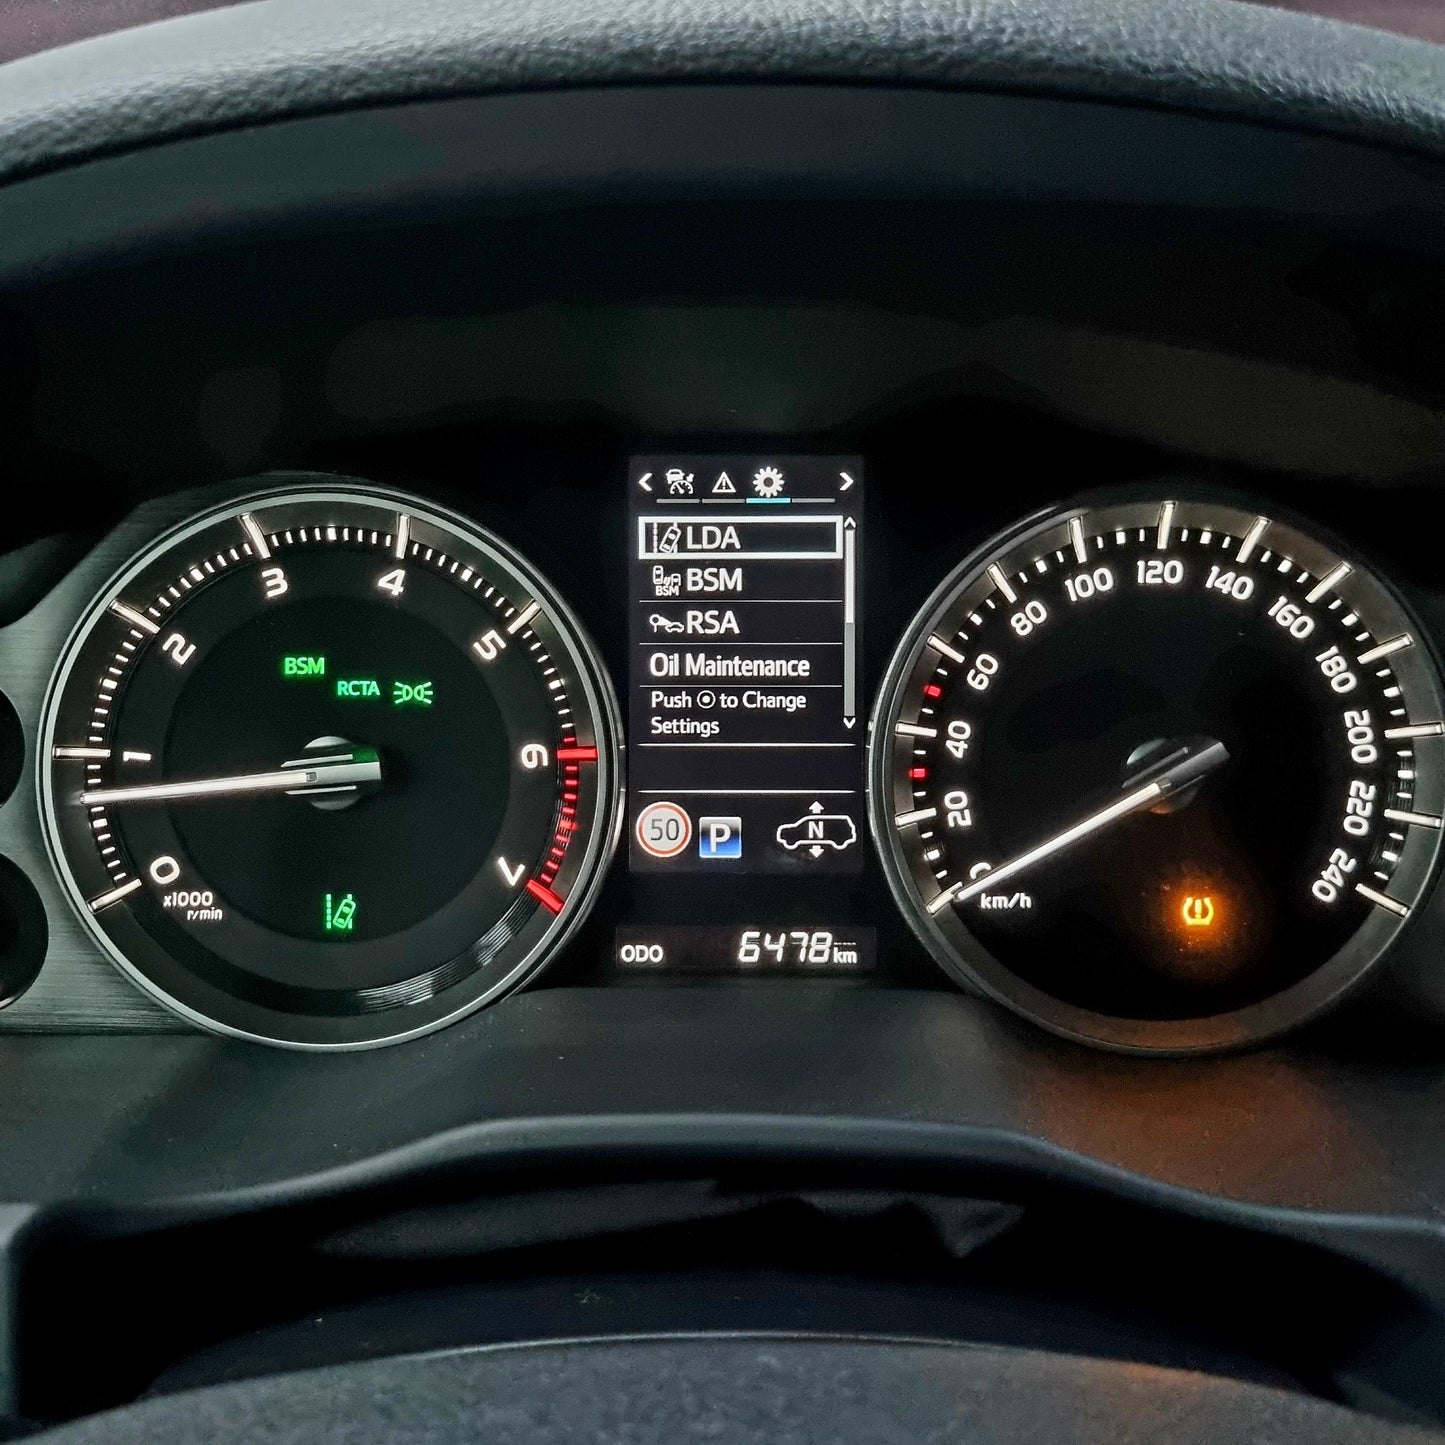 Toyota LandCruiser 200 Benzine 4.6 03/2019 6.418km